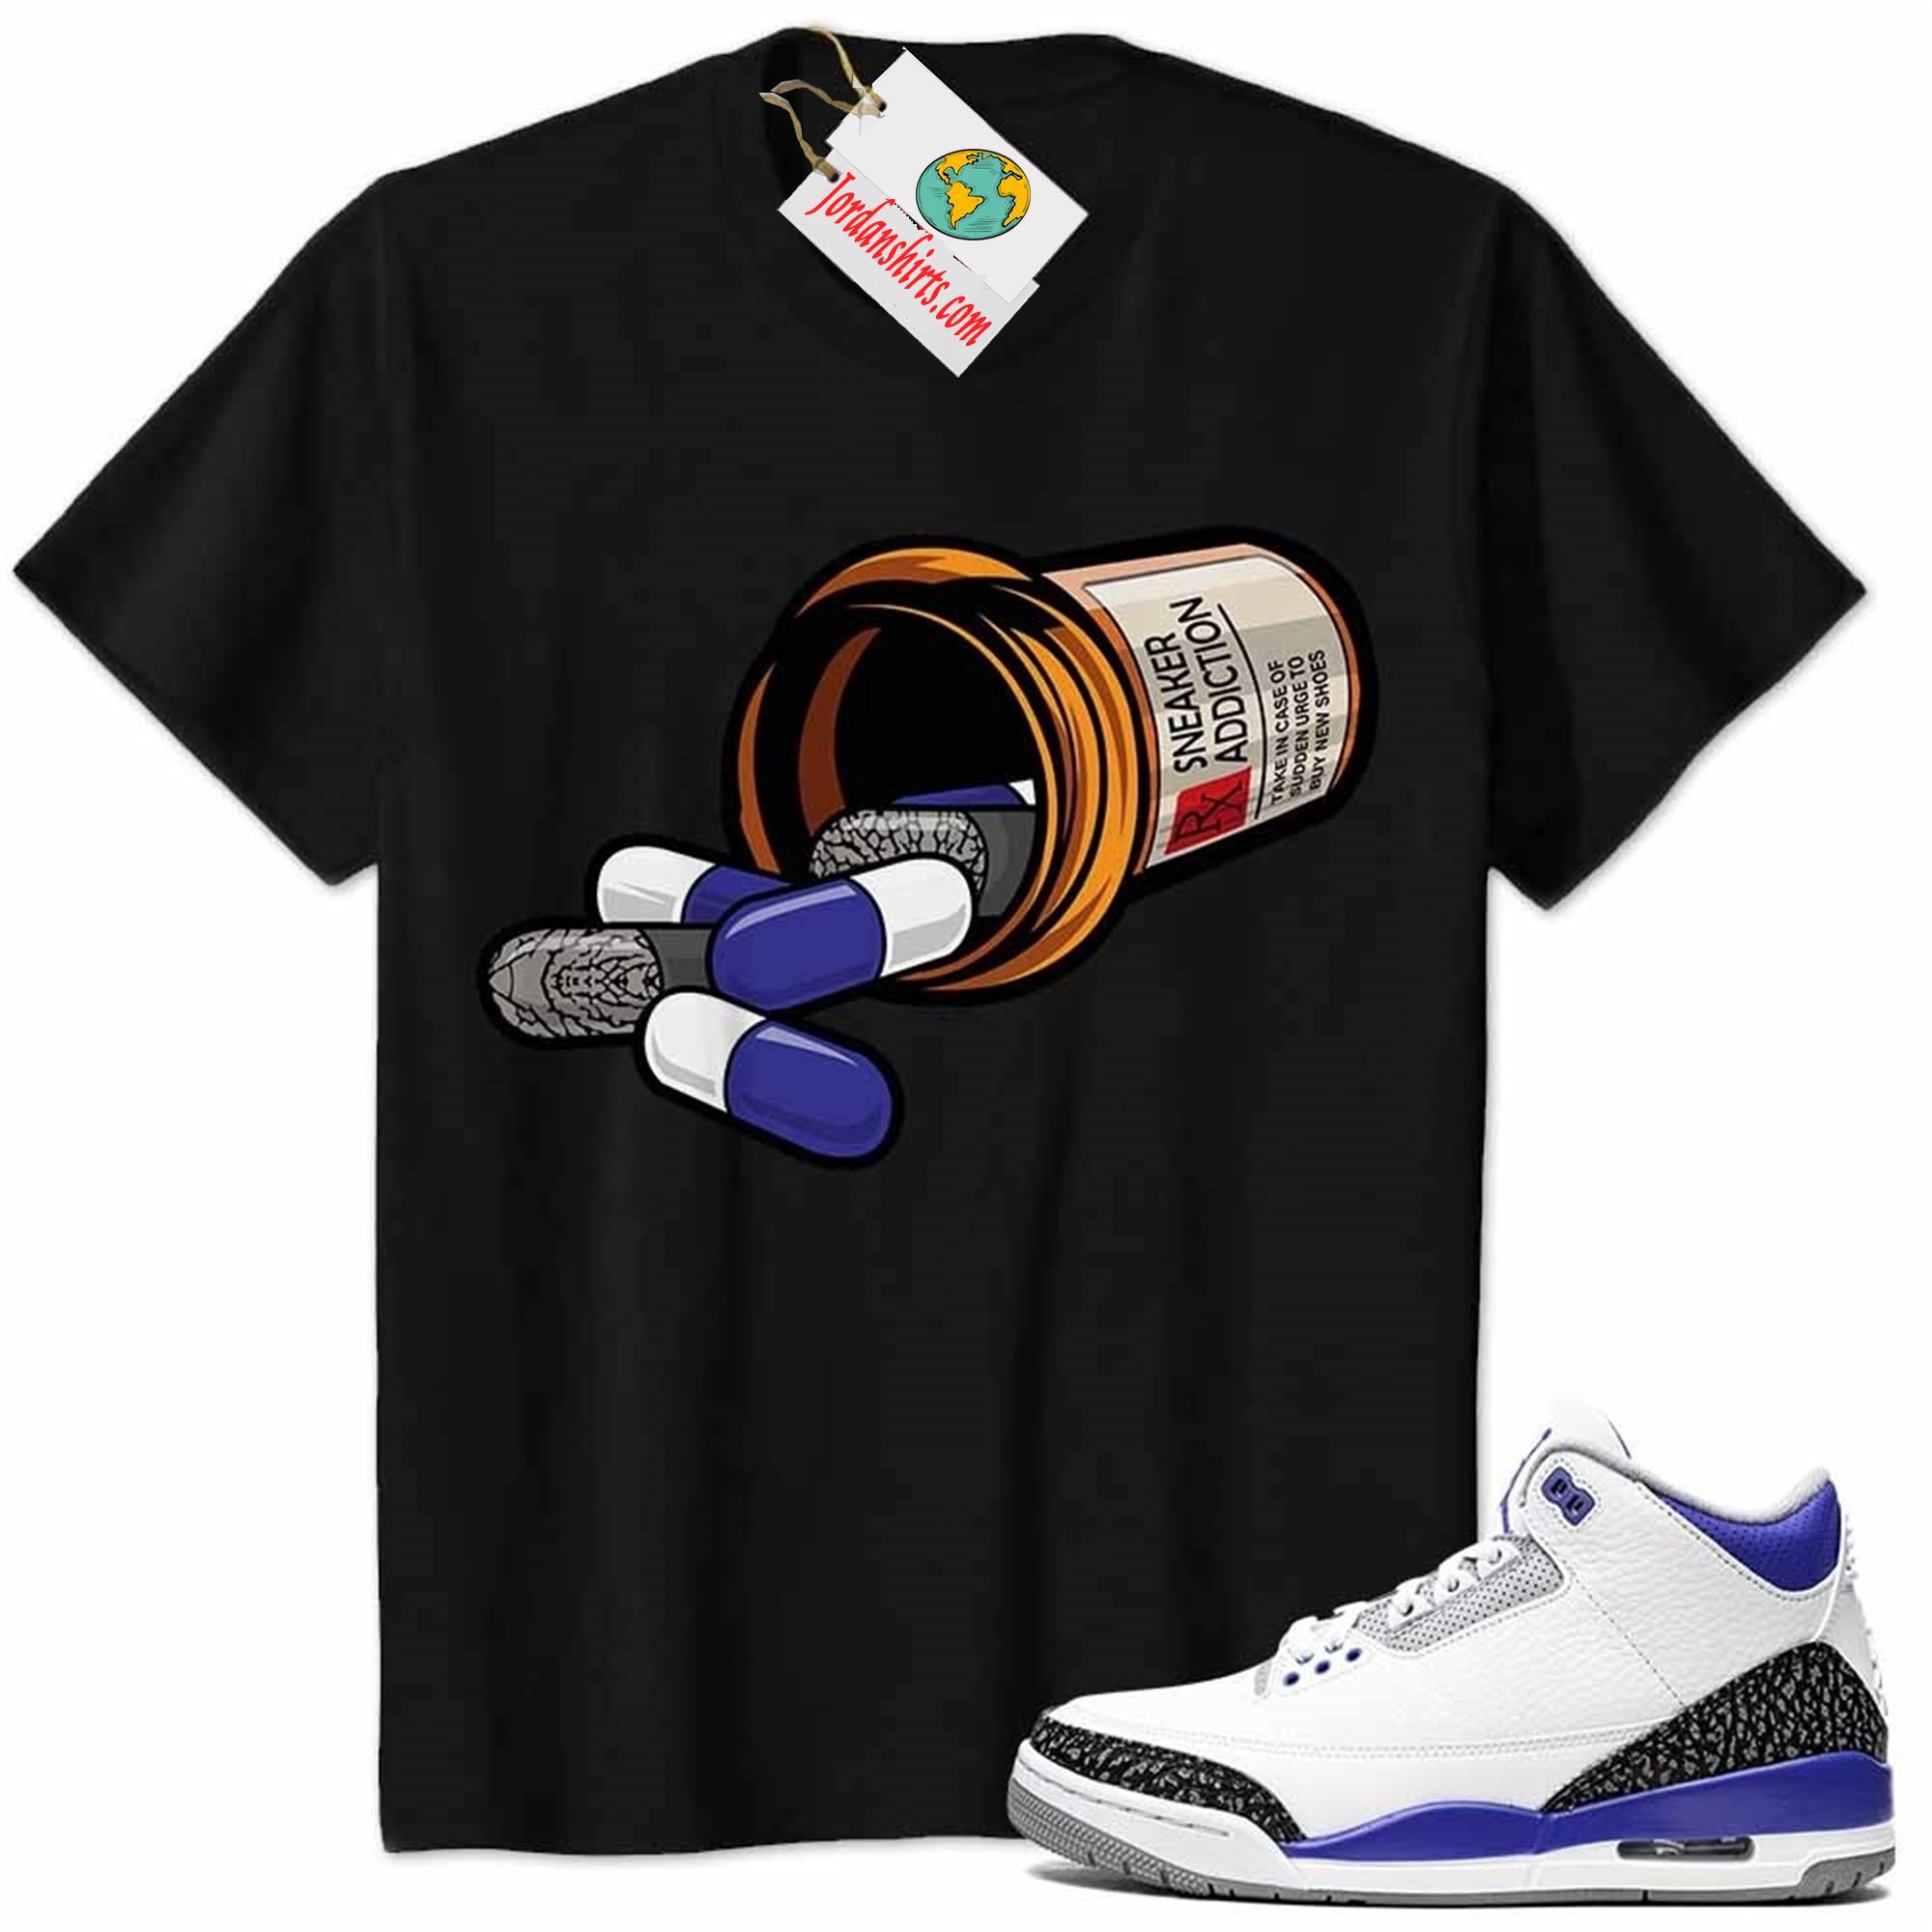 Jordan 3 Shirt, Rx Drugs Pill Bottle Sneaker Addiction Black Air Jordan 3 Racer Blue 3s Full Size Up To 5xl